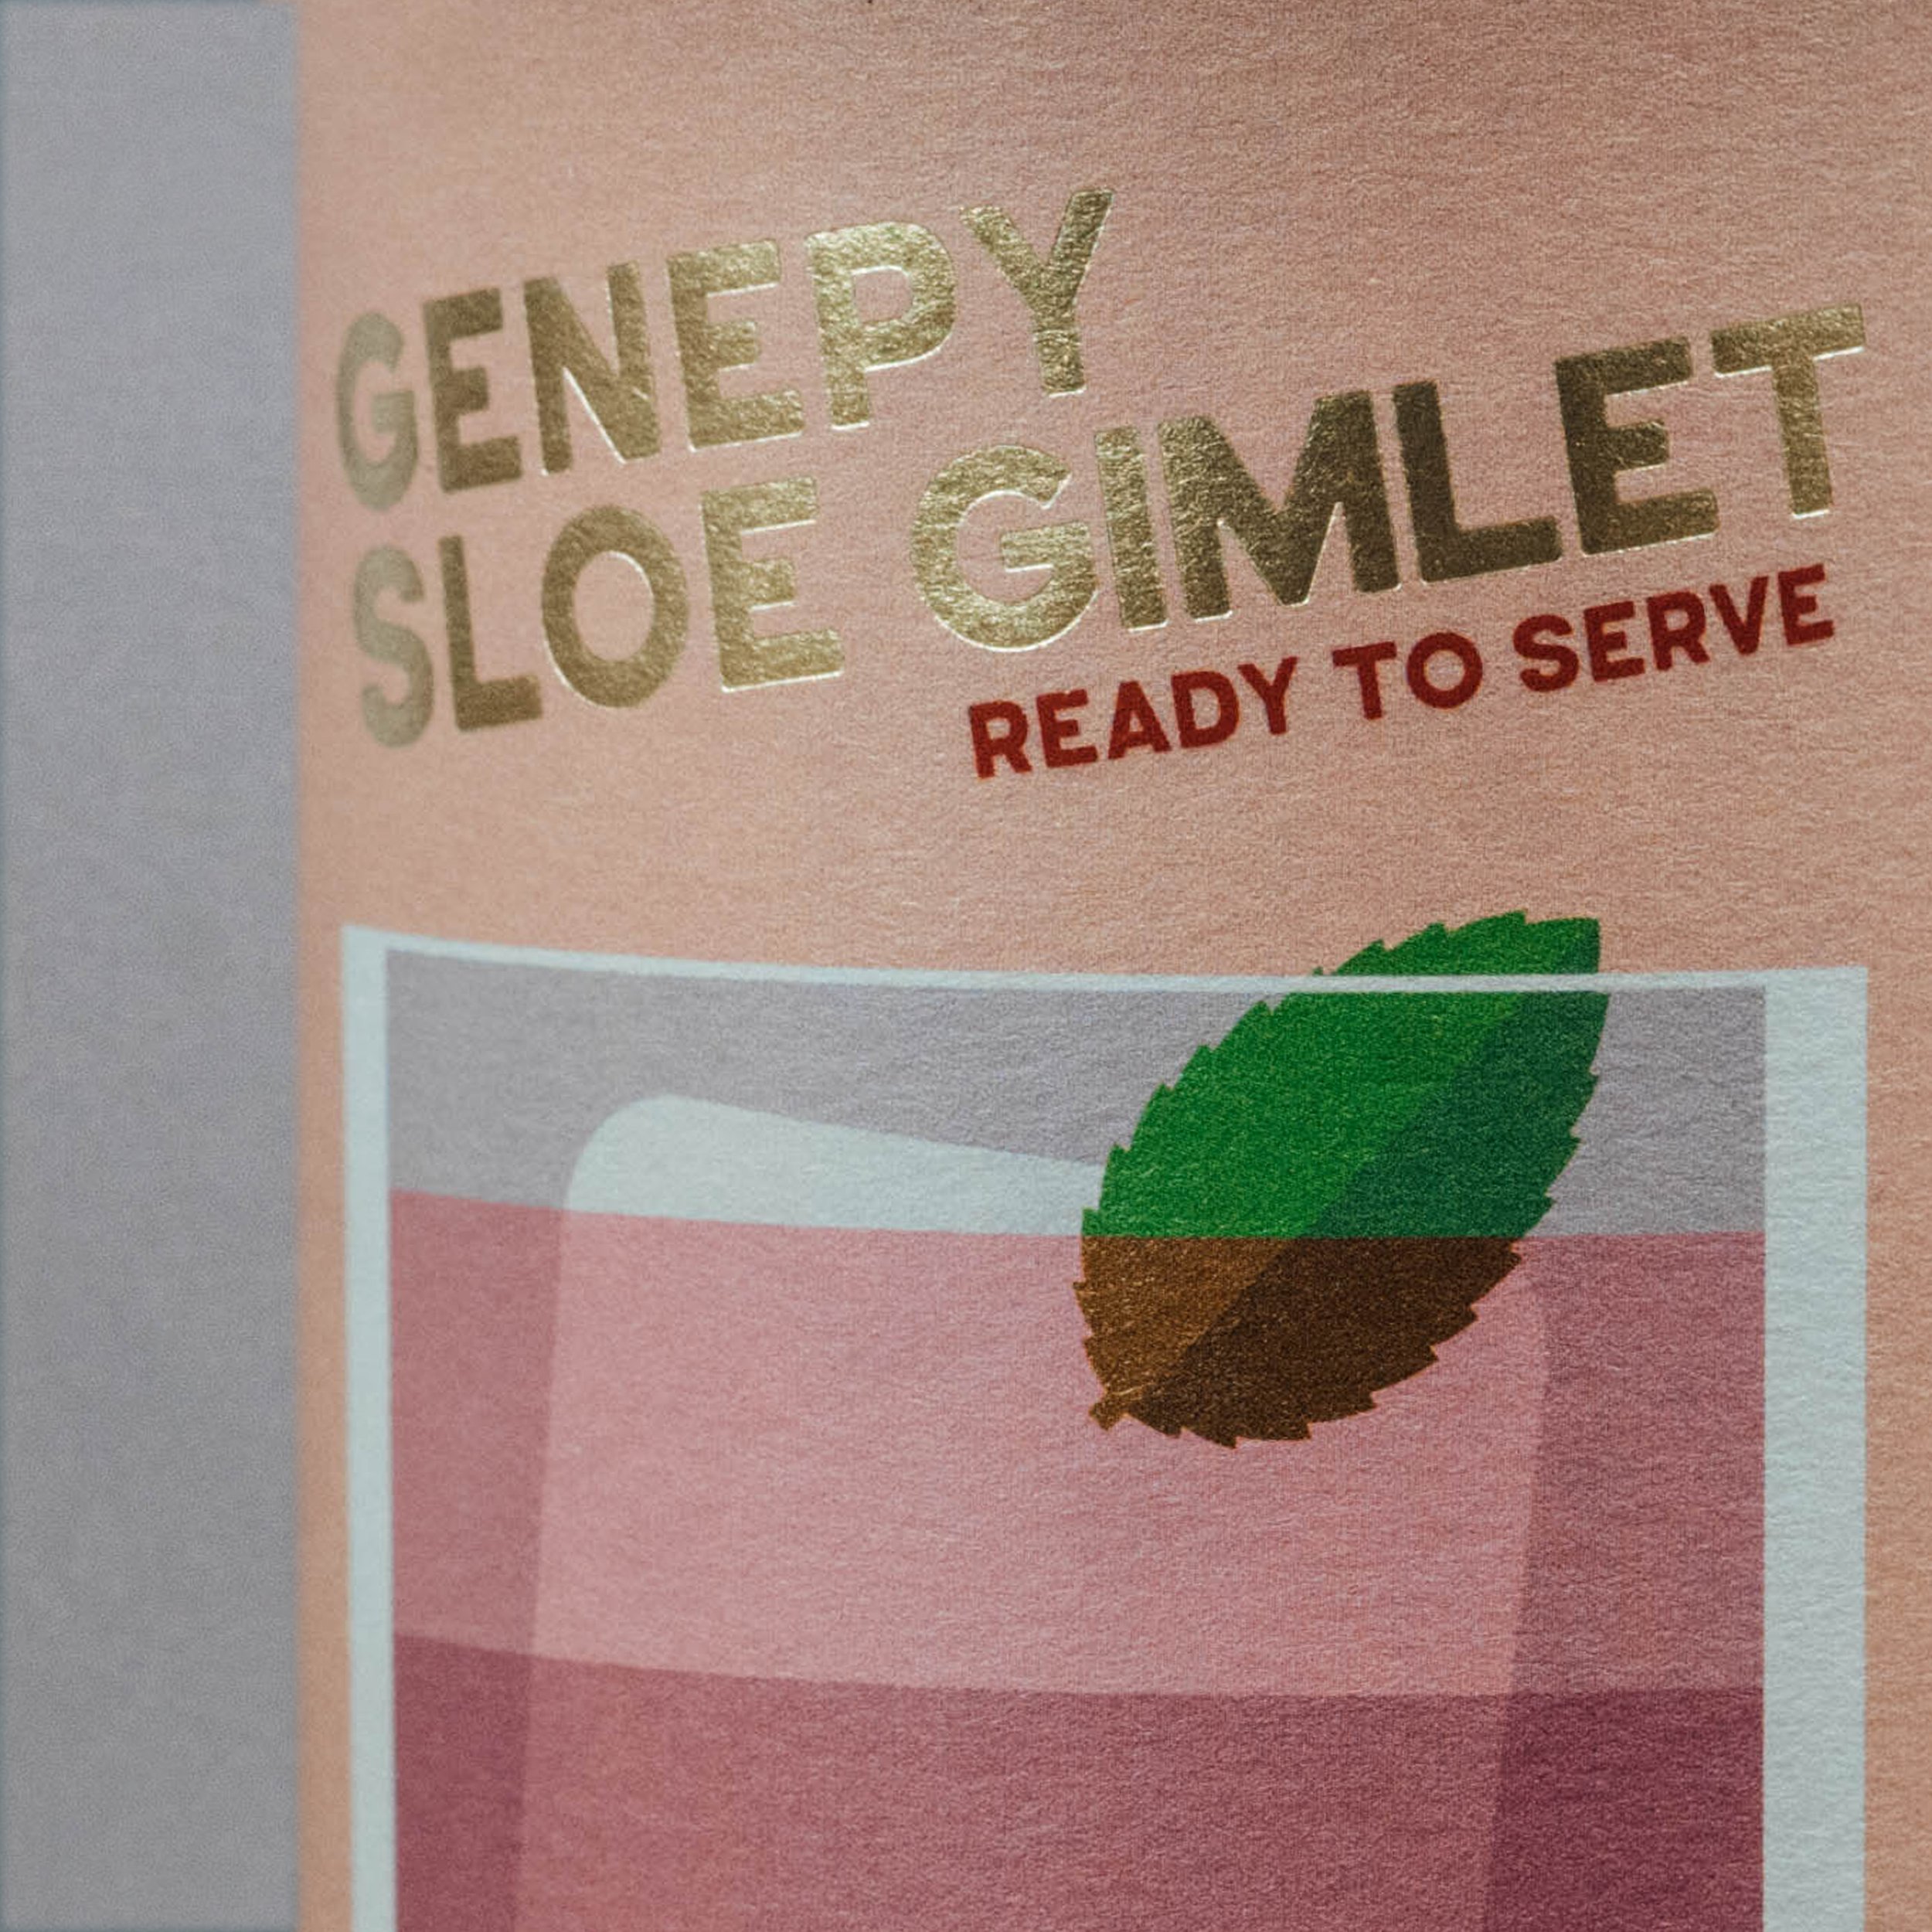 Genepy Sloe Gimlet Close Up 1.jpg